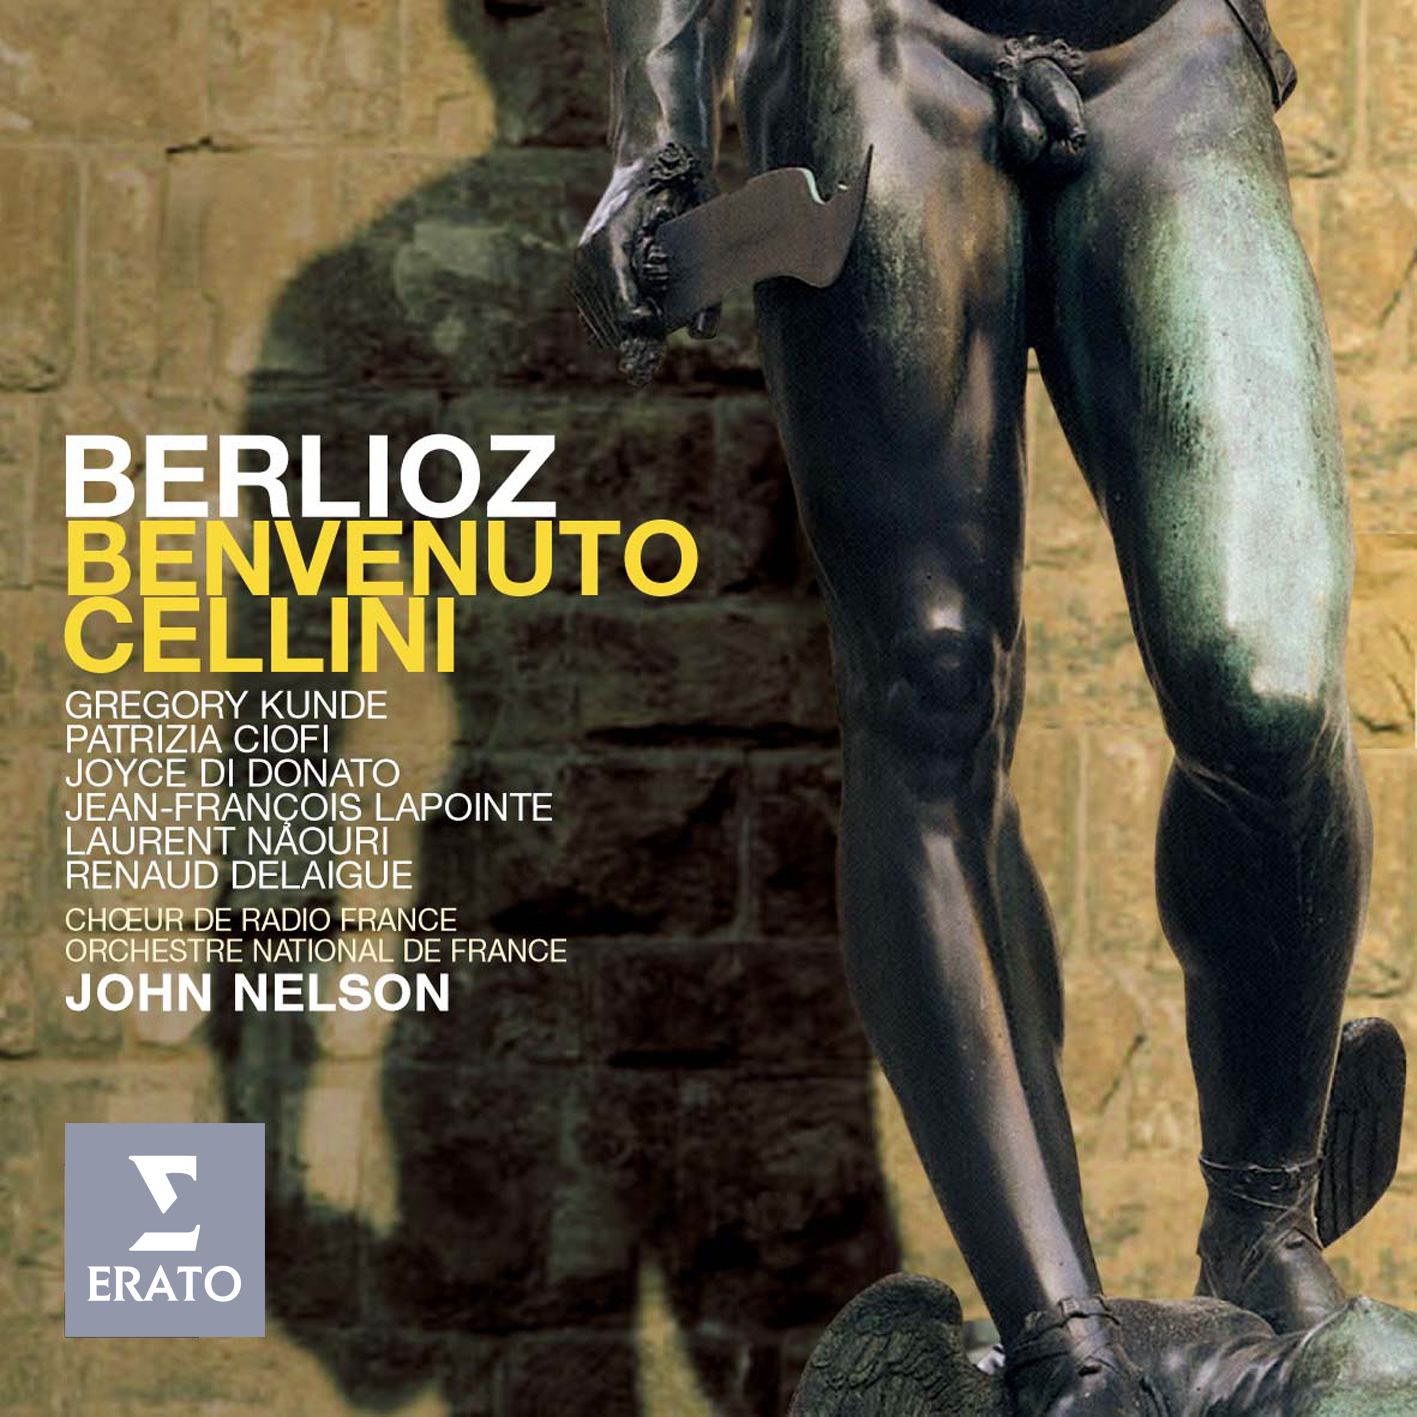 Benvenuto Cellini, H. 76a, Act 1: "À boire, a boire !" Cellini, Fraancesco, Bernardino, Chorus